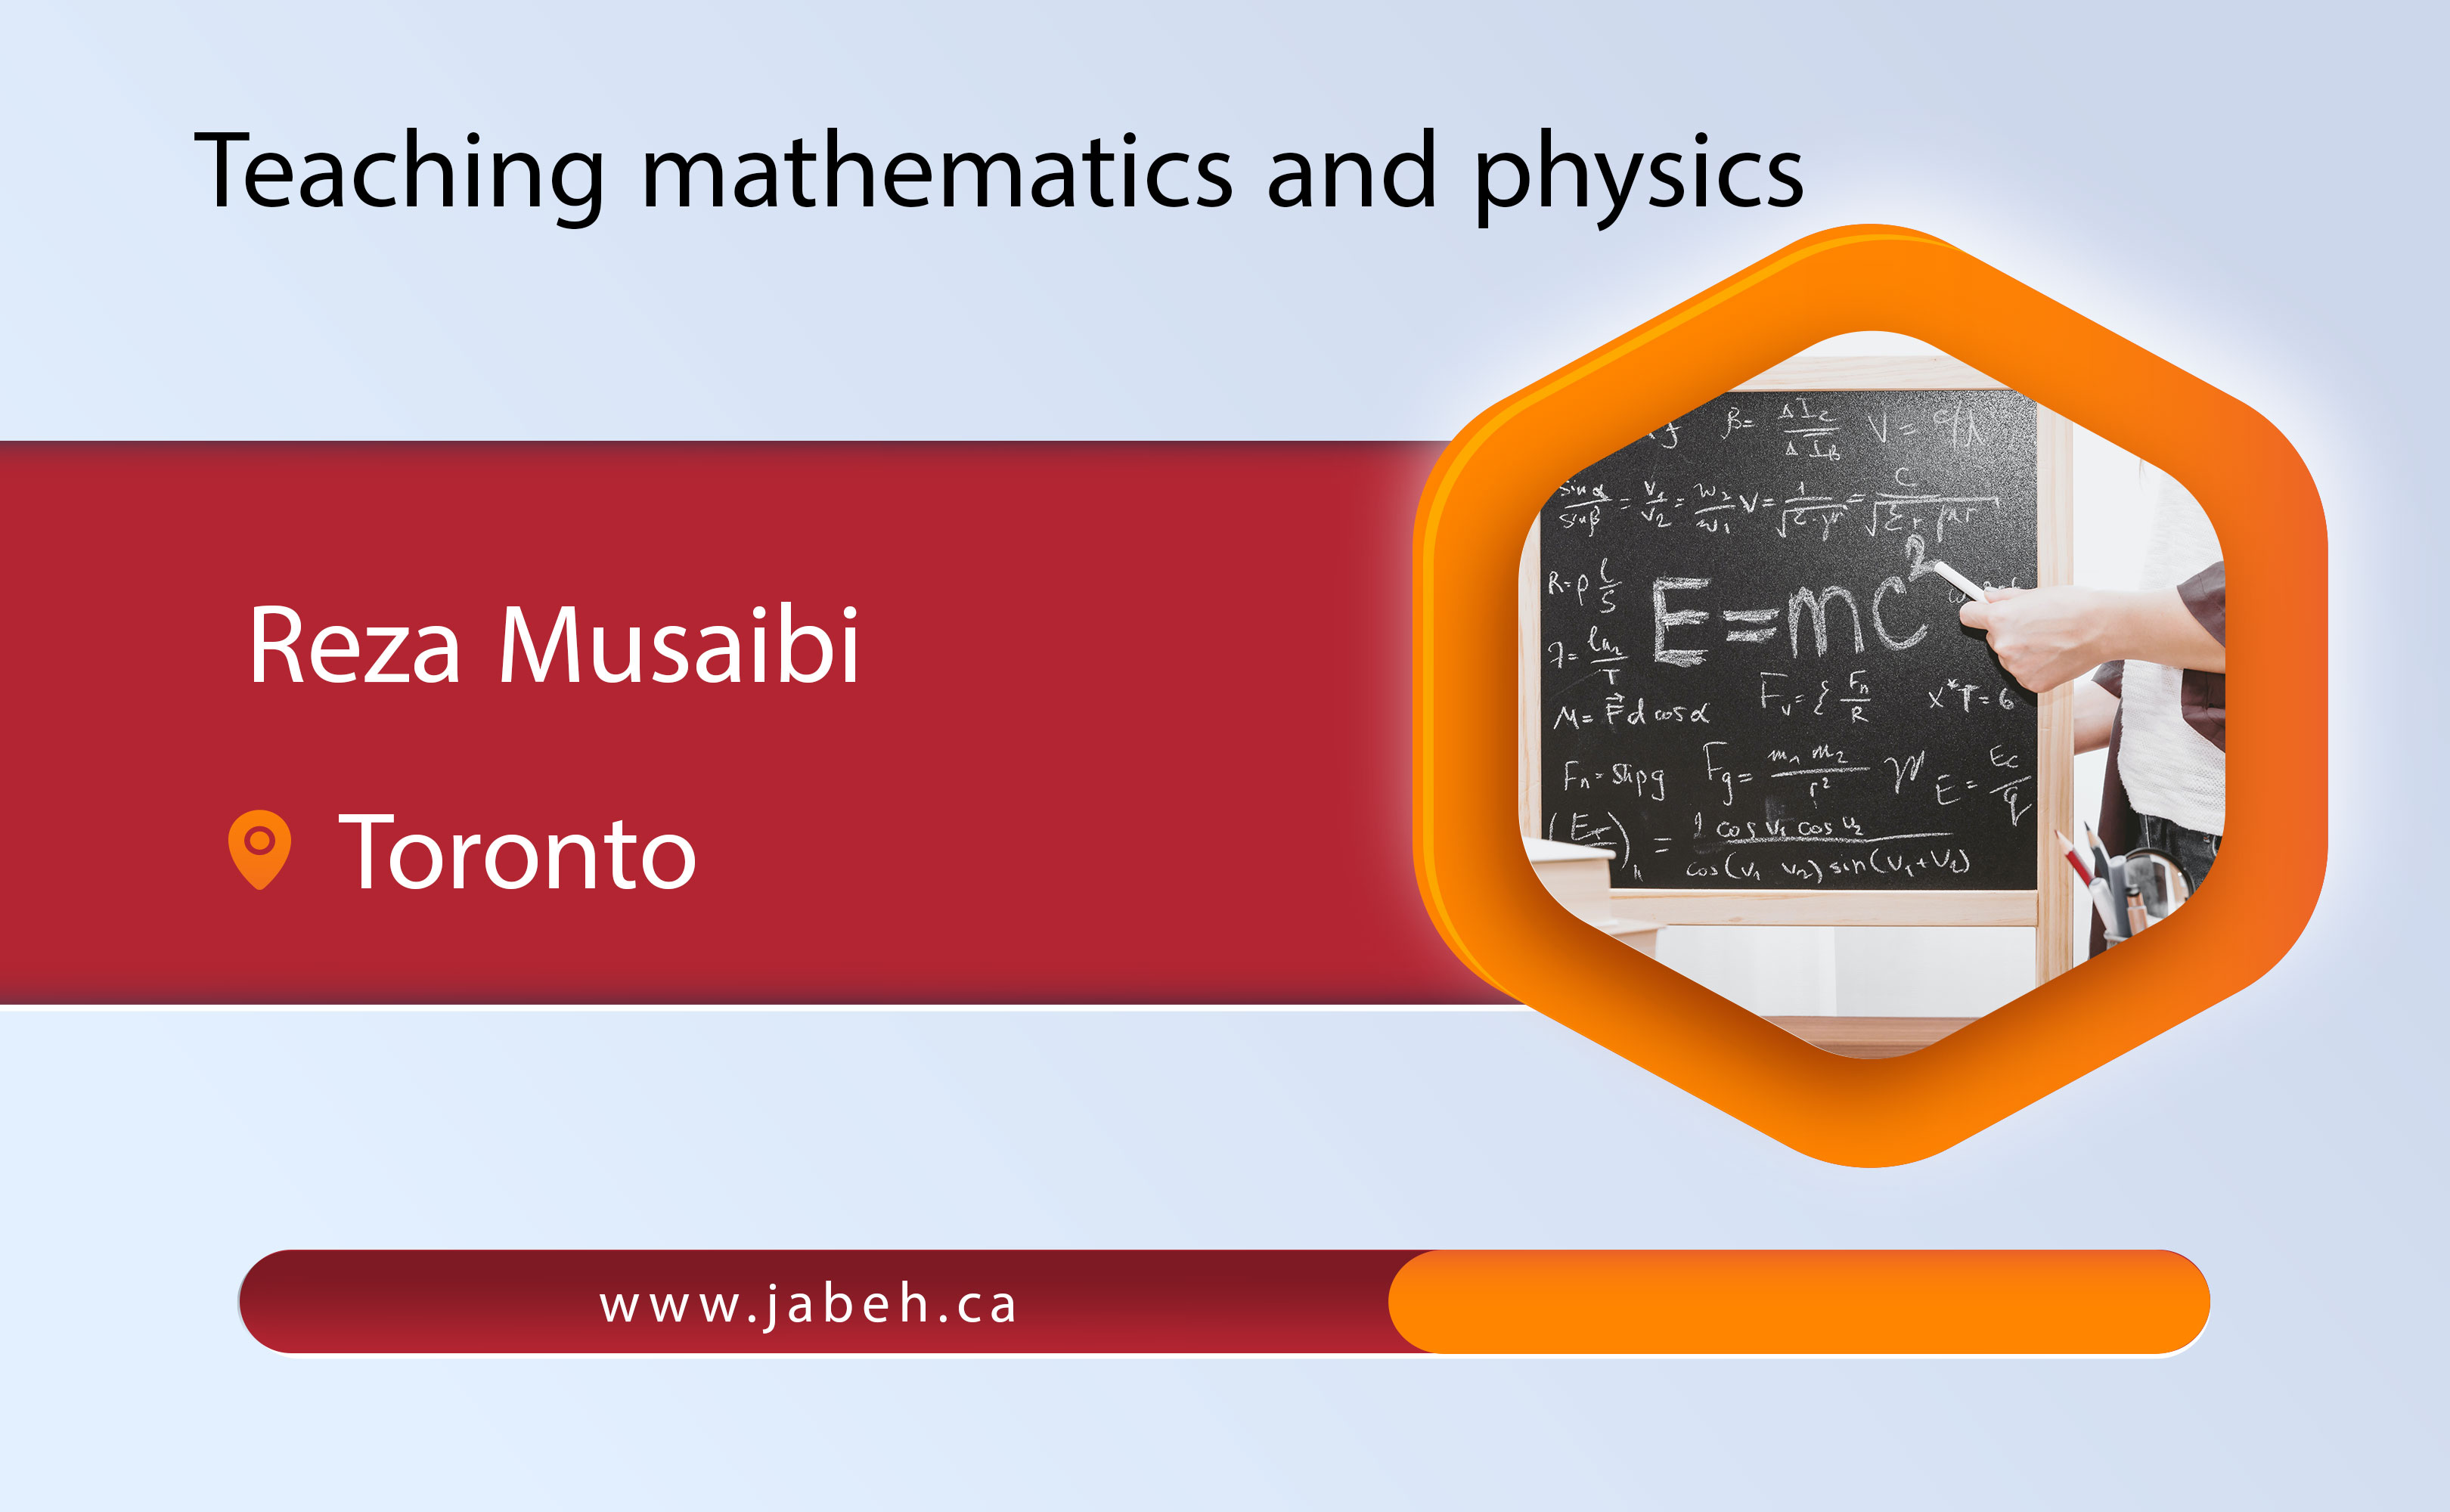 Reza Musaibi's math and physics education in Toronto